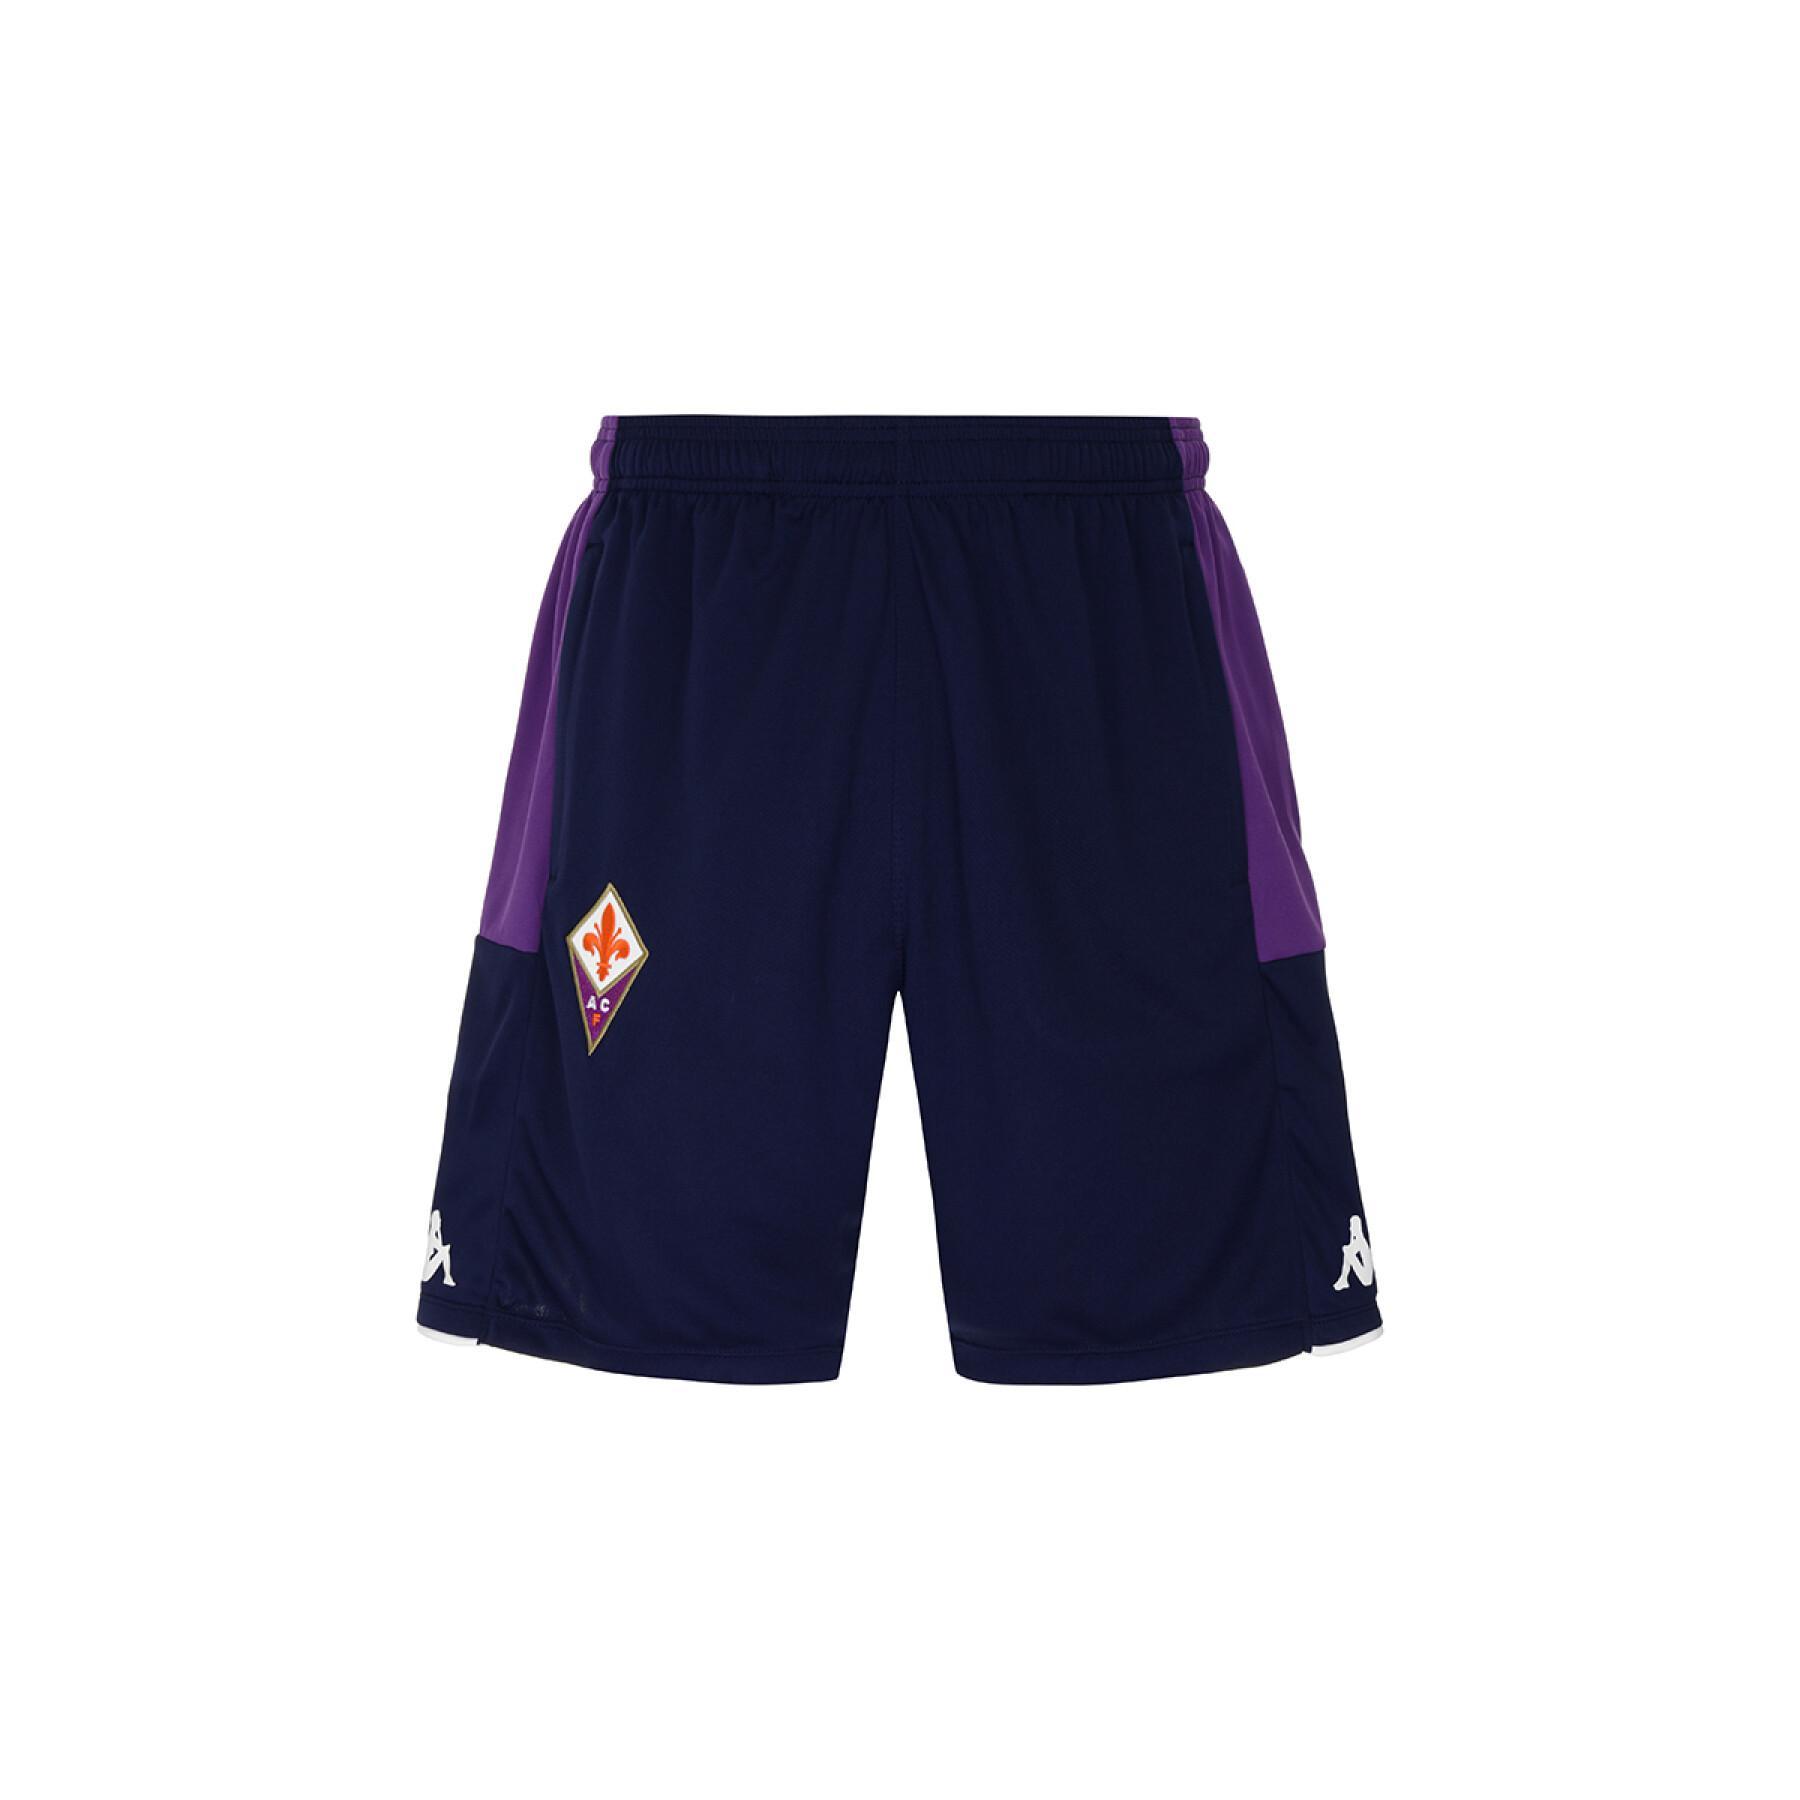 Pantalón corto Fiorentina AC 2021/22 ahorazip pro 5